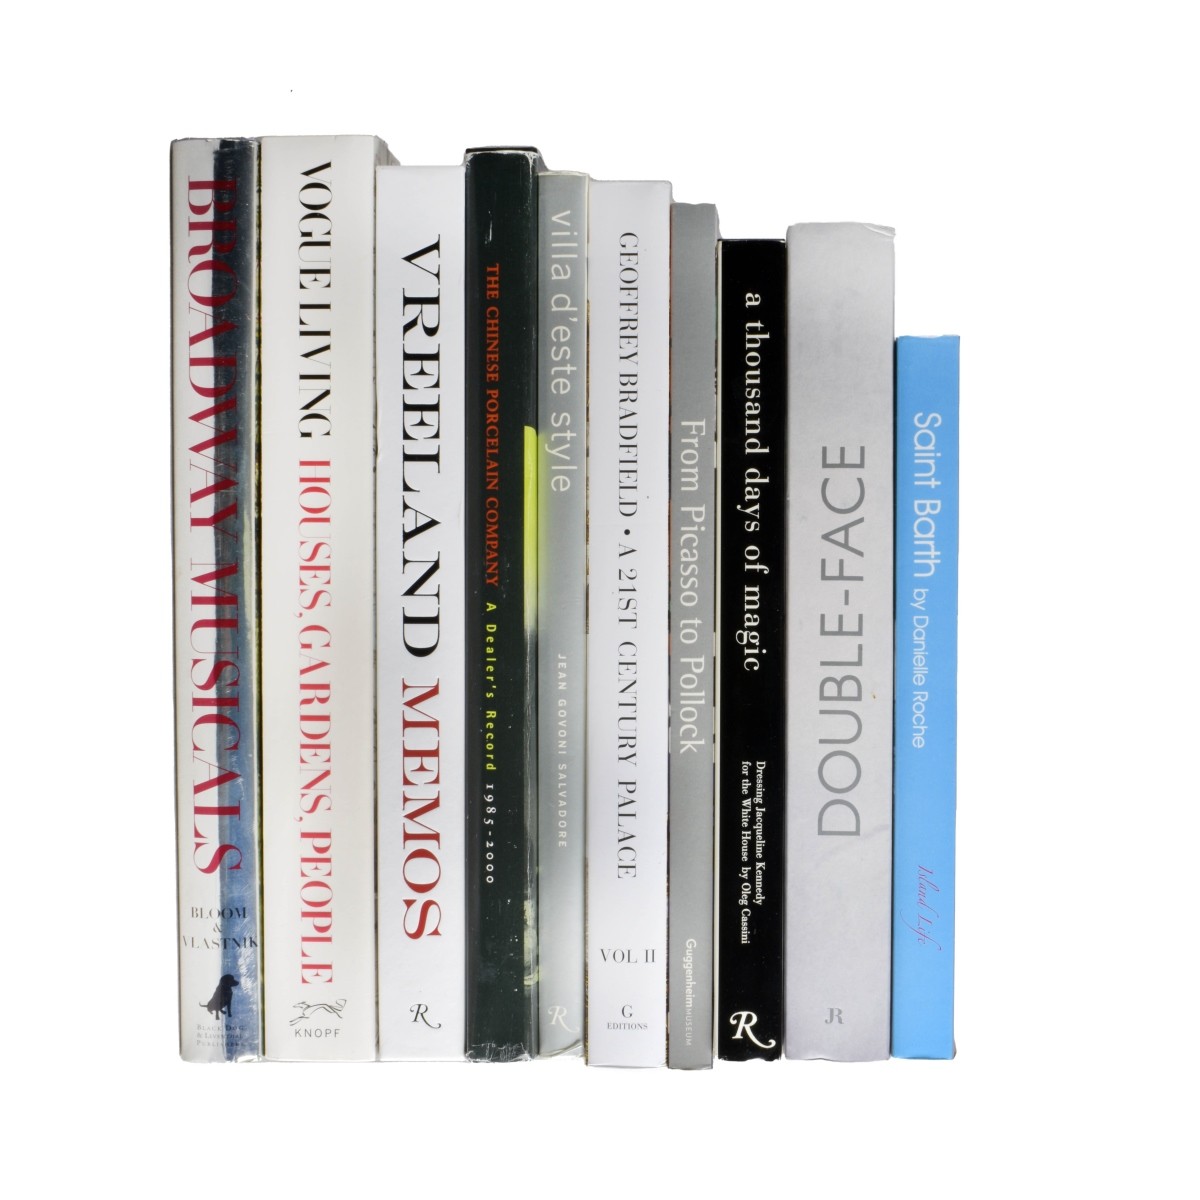 Ten Volumes on Art, Design, Travel & Culture